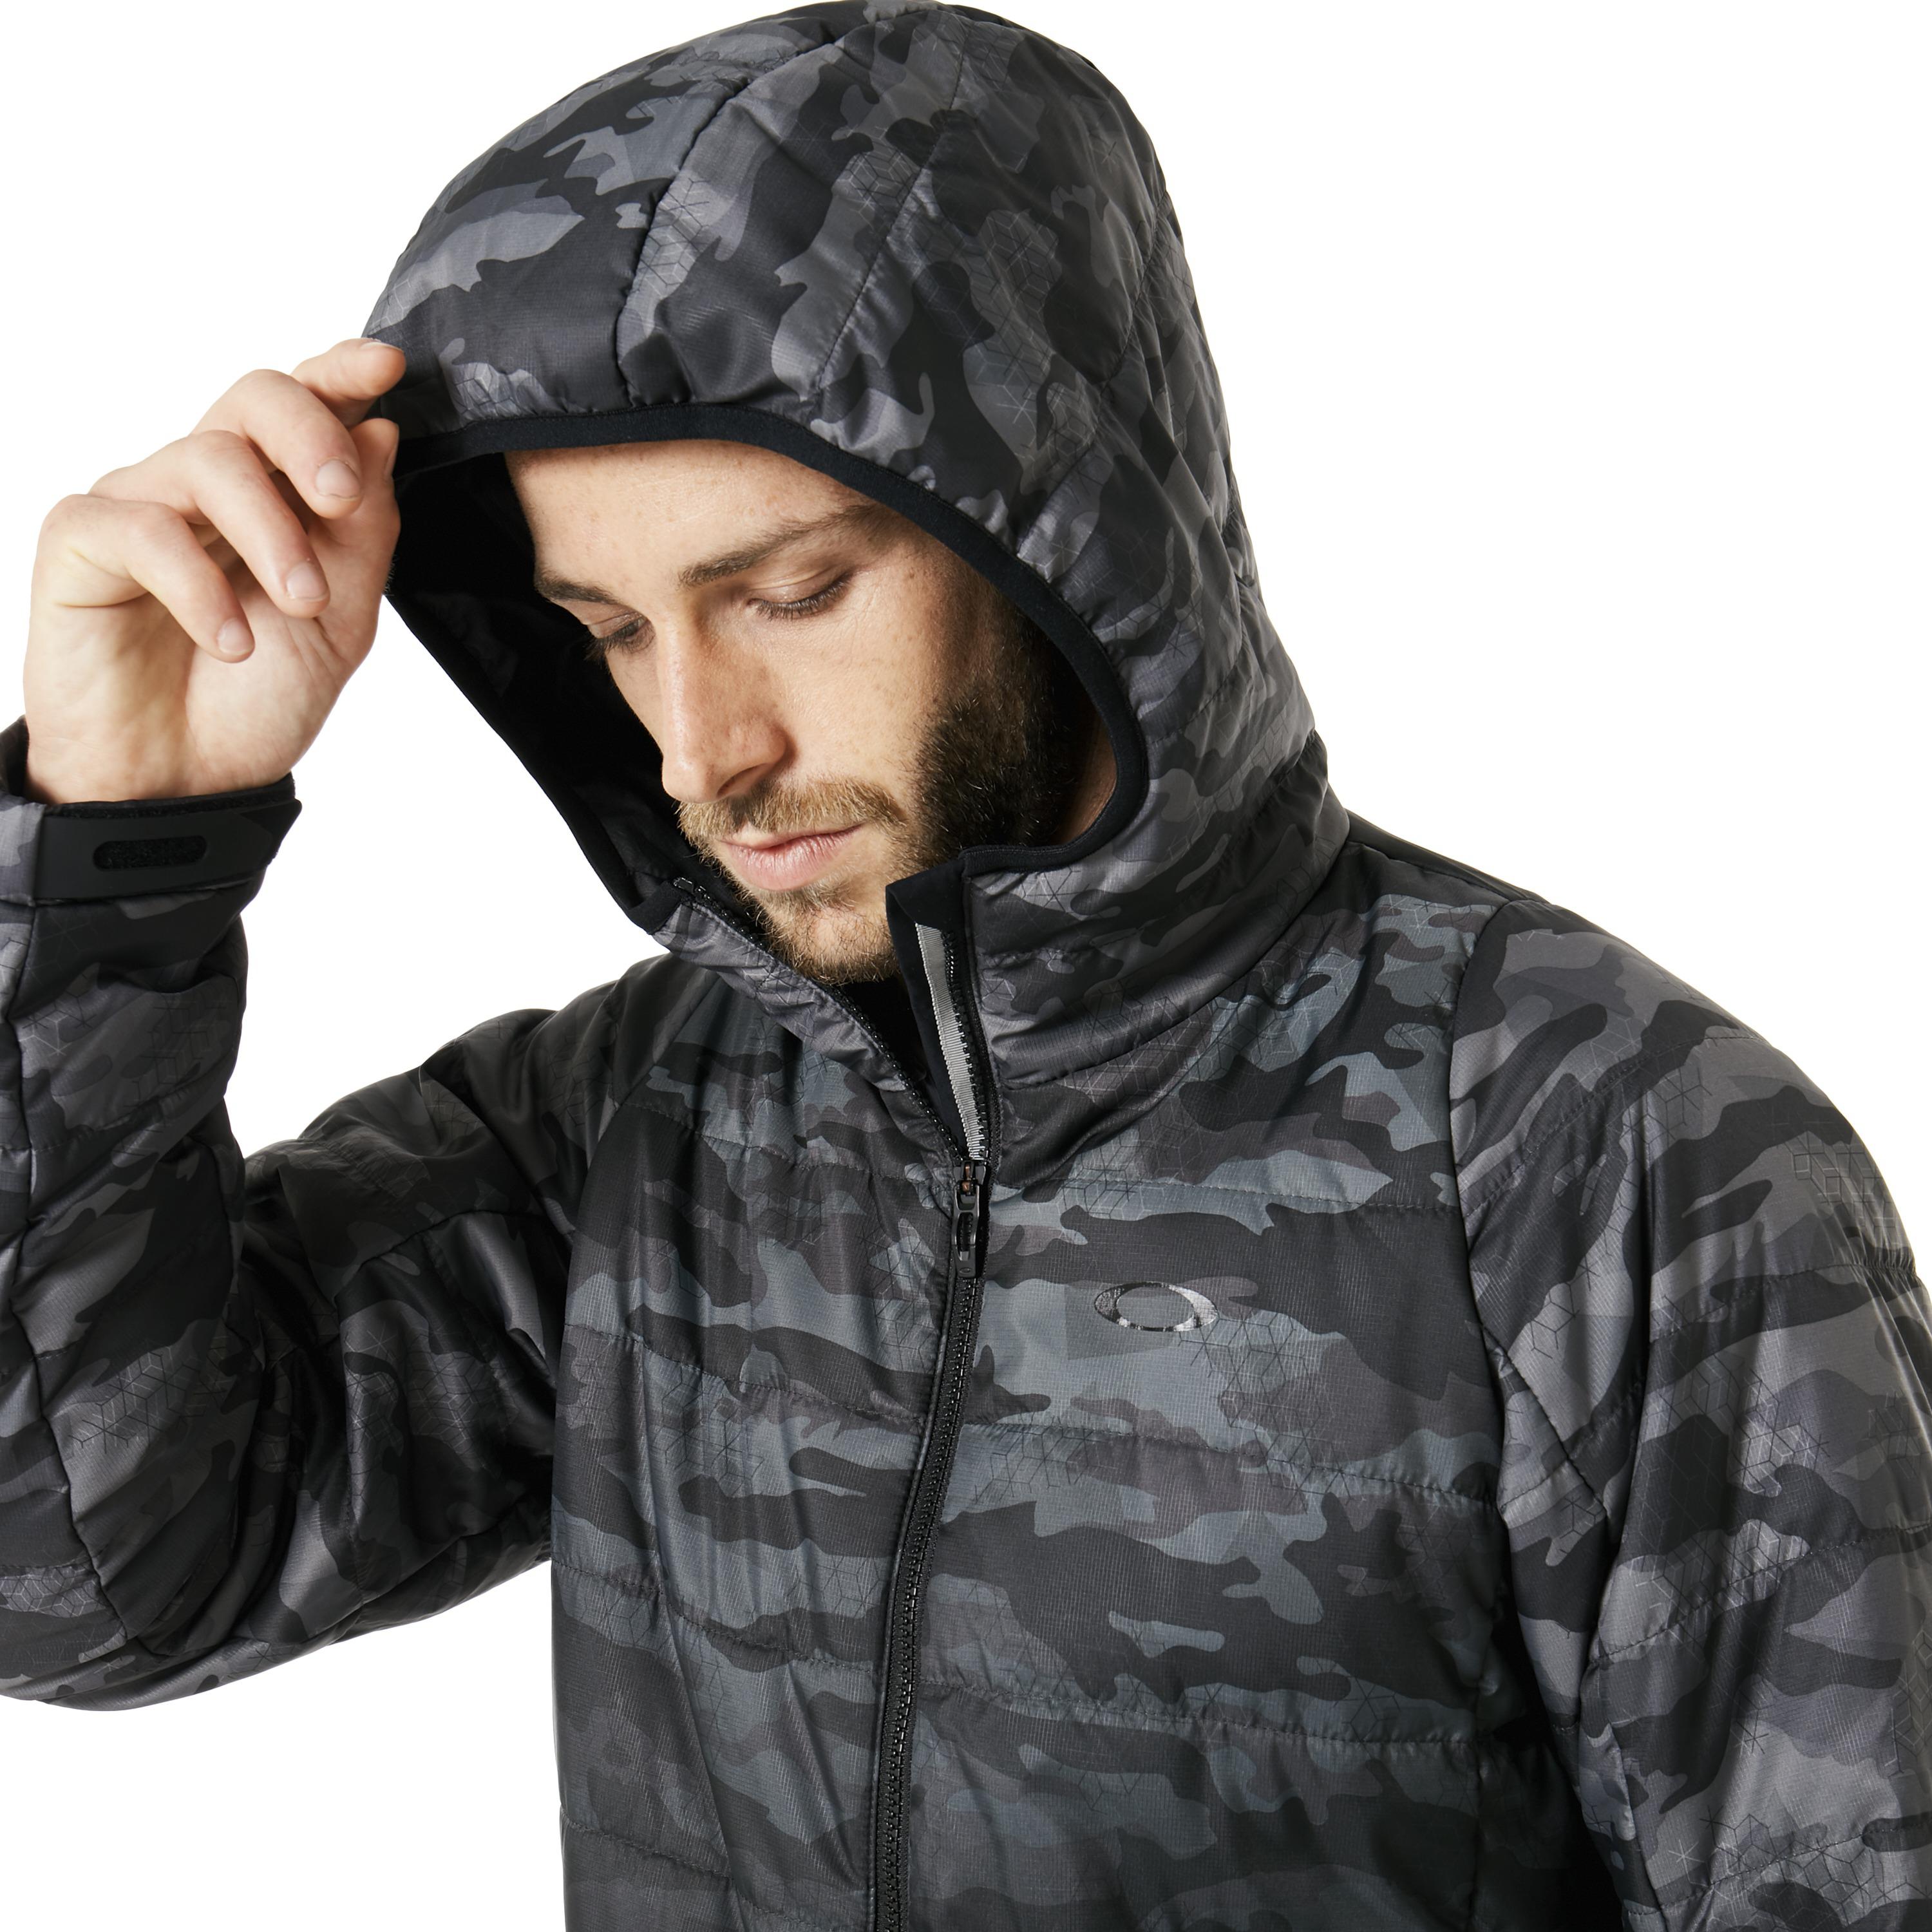 enhance insulation quilting jacket 8.7